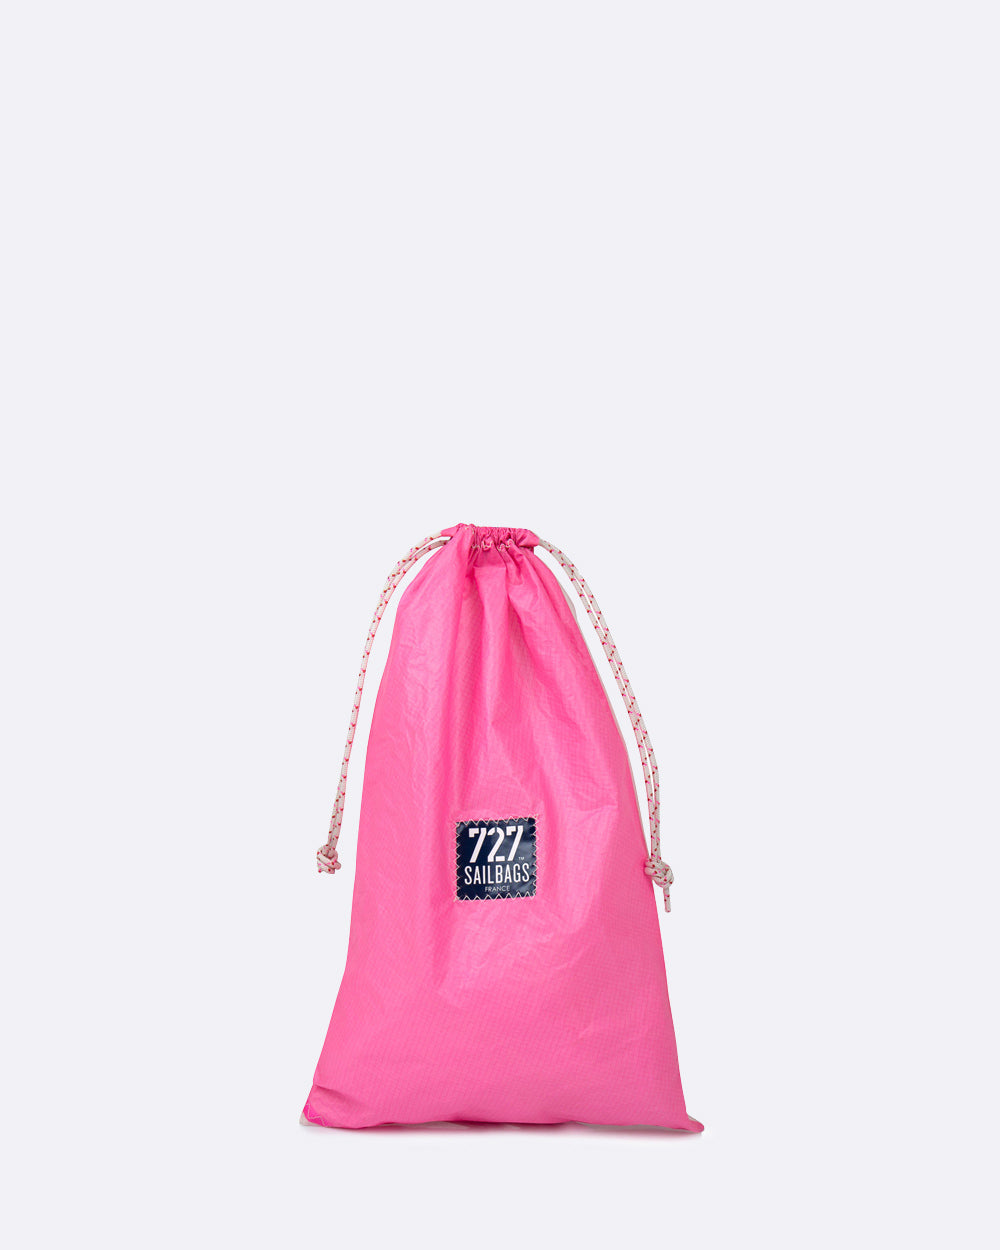 Strandbeutel "Spi Bag" by 727 Sailbags / Segeltuch pink